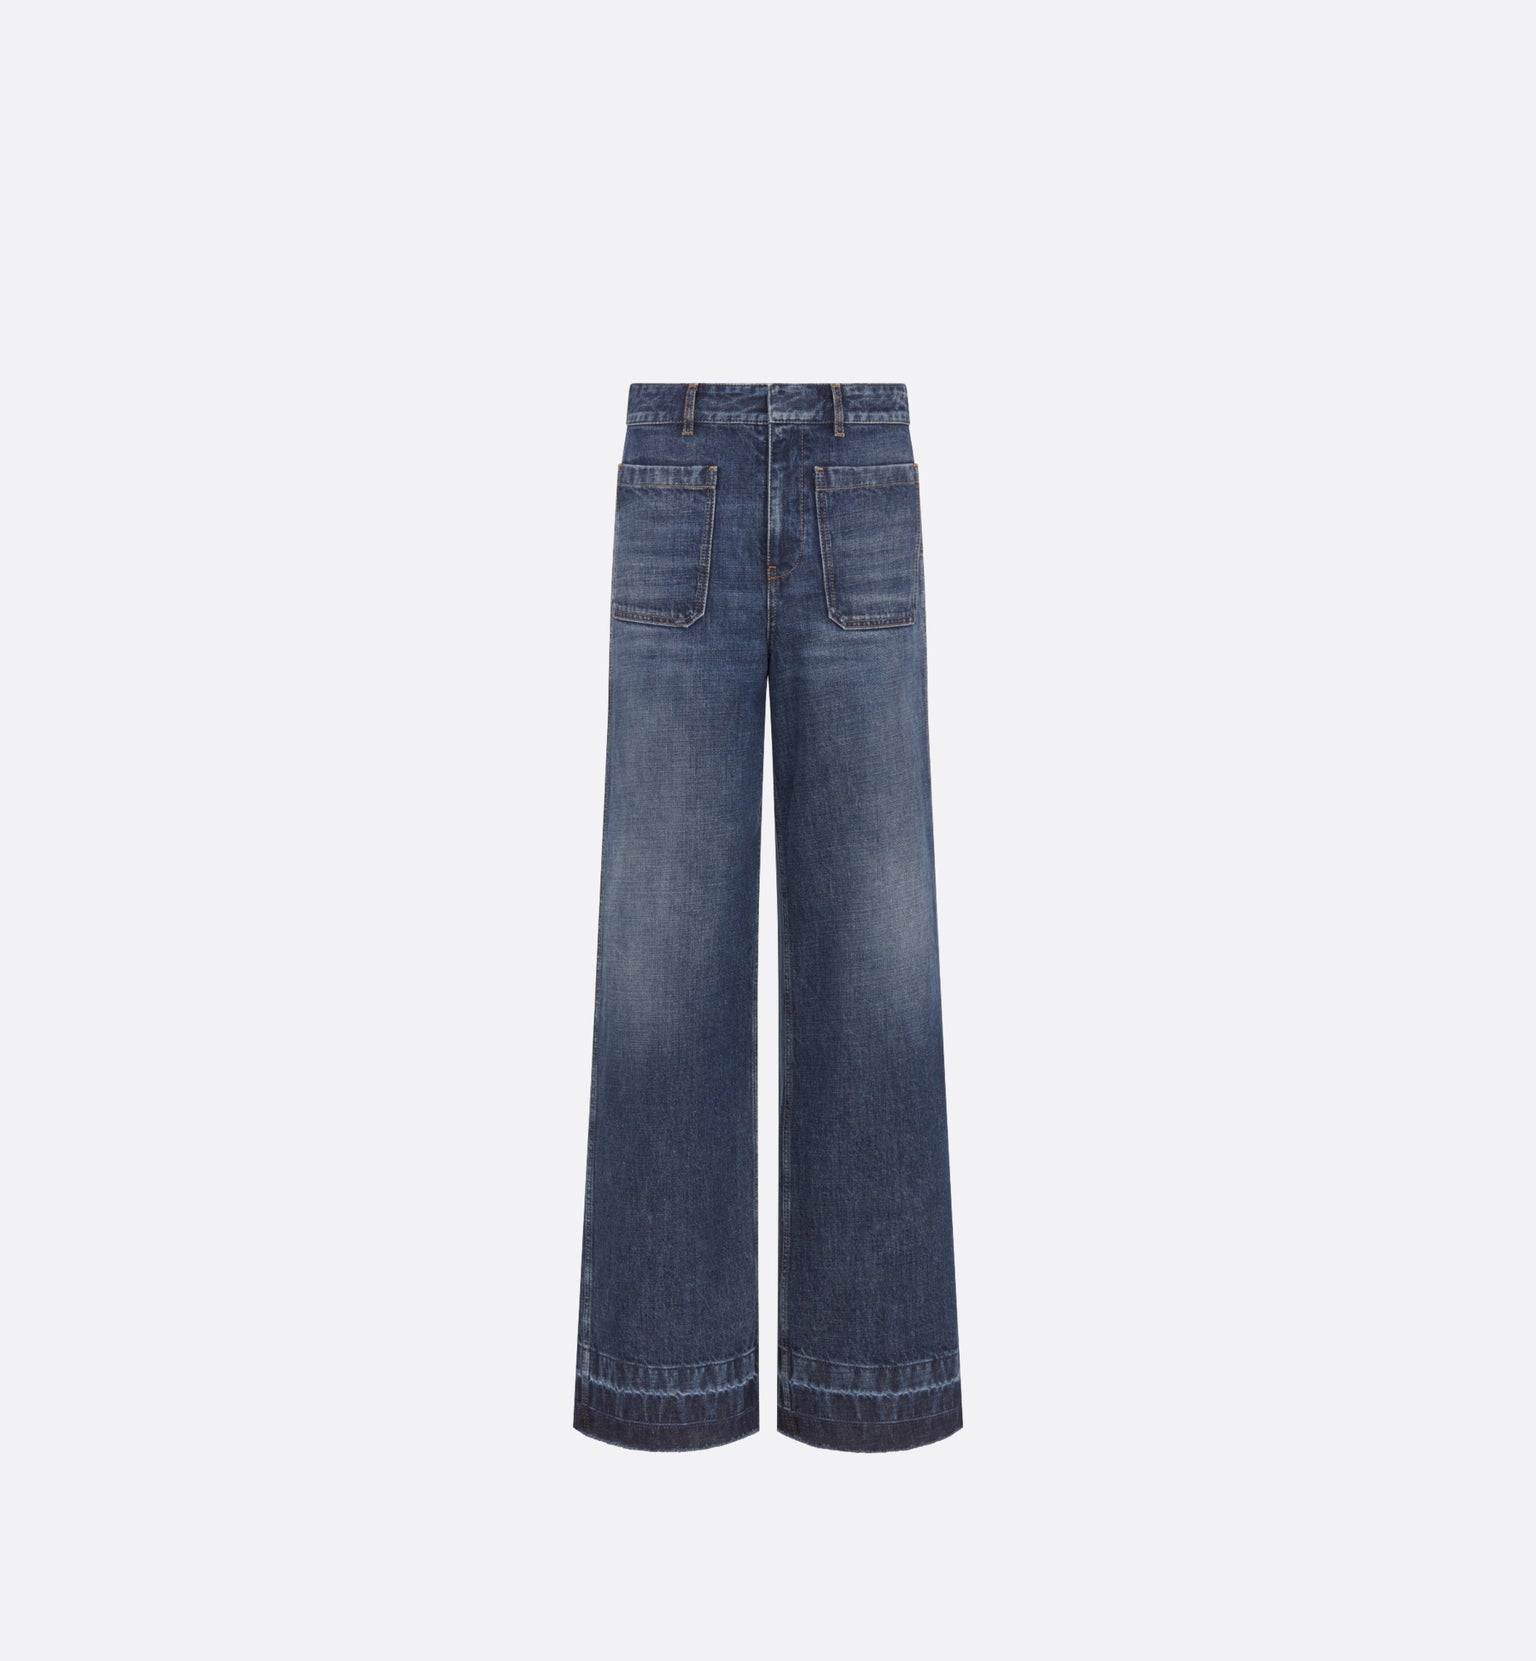 Dior 8 Flared Jeans, D04 • Blue Stonewashed Cotton Denim